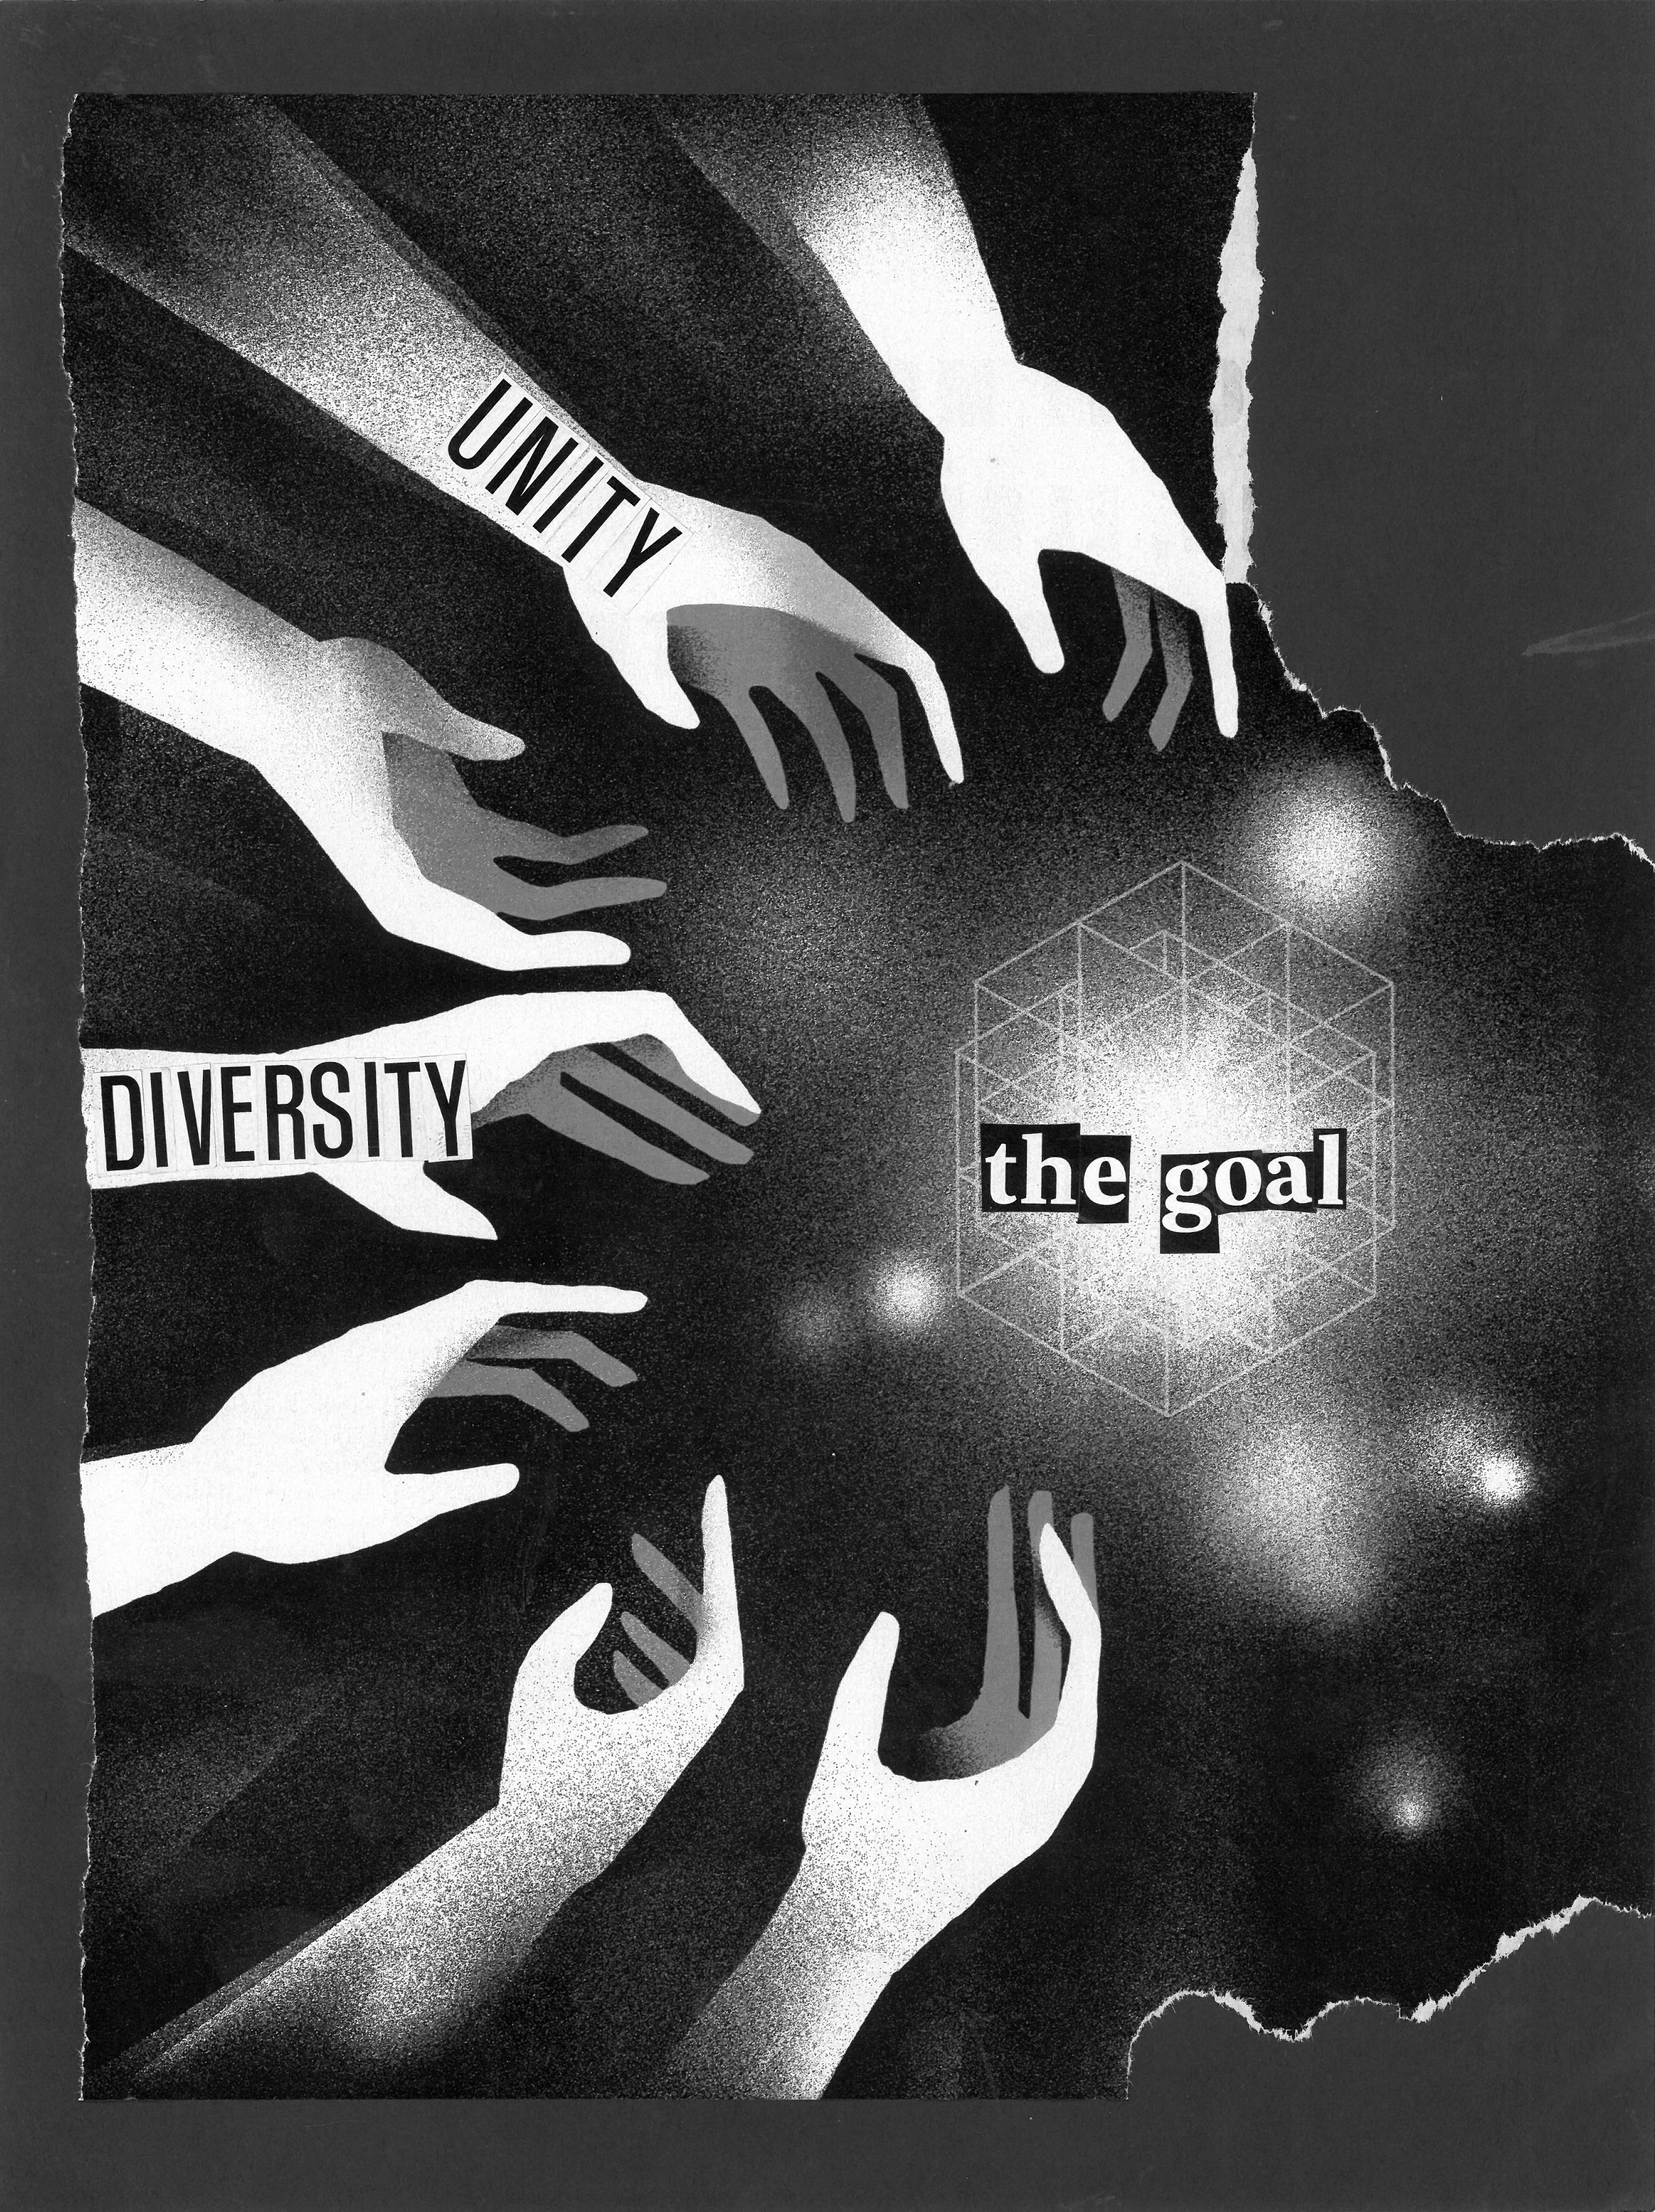 the-goal_-unity-_-diversity